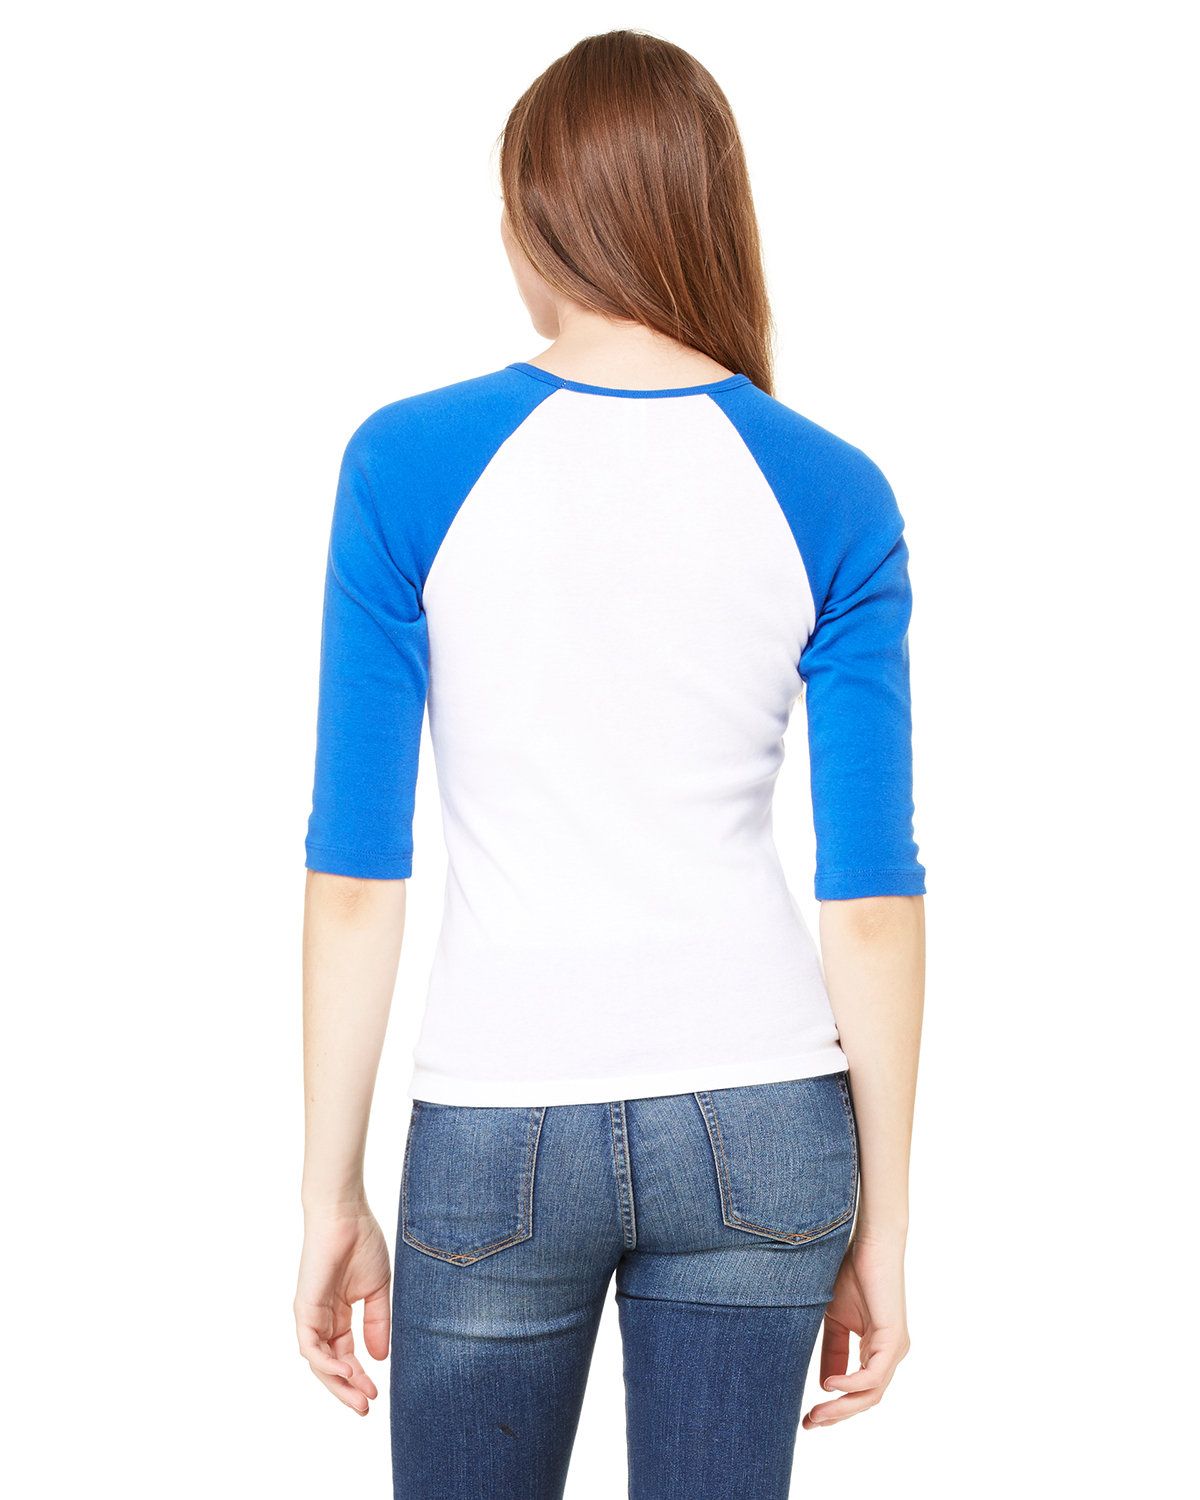 'Bella Canvas B2000 Ladies' Baby Rib 3/4-Sleeve Contrast Raglan T-Shirt'